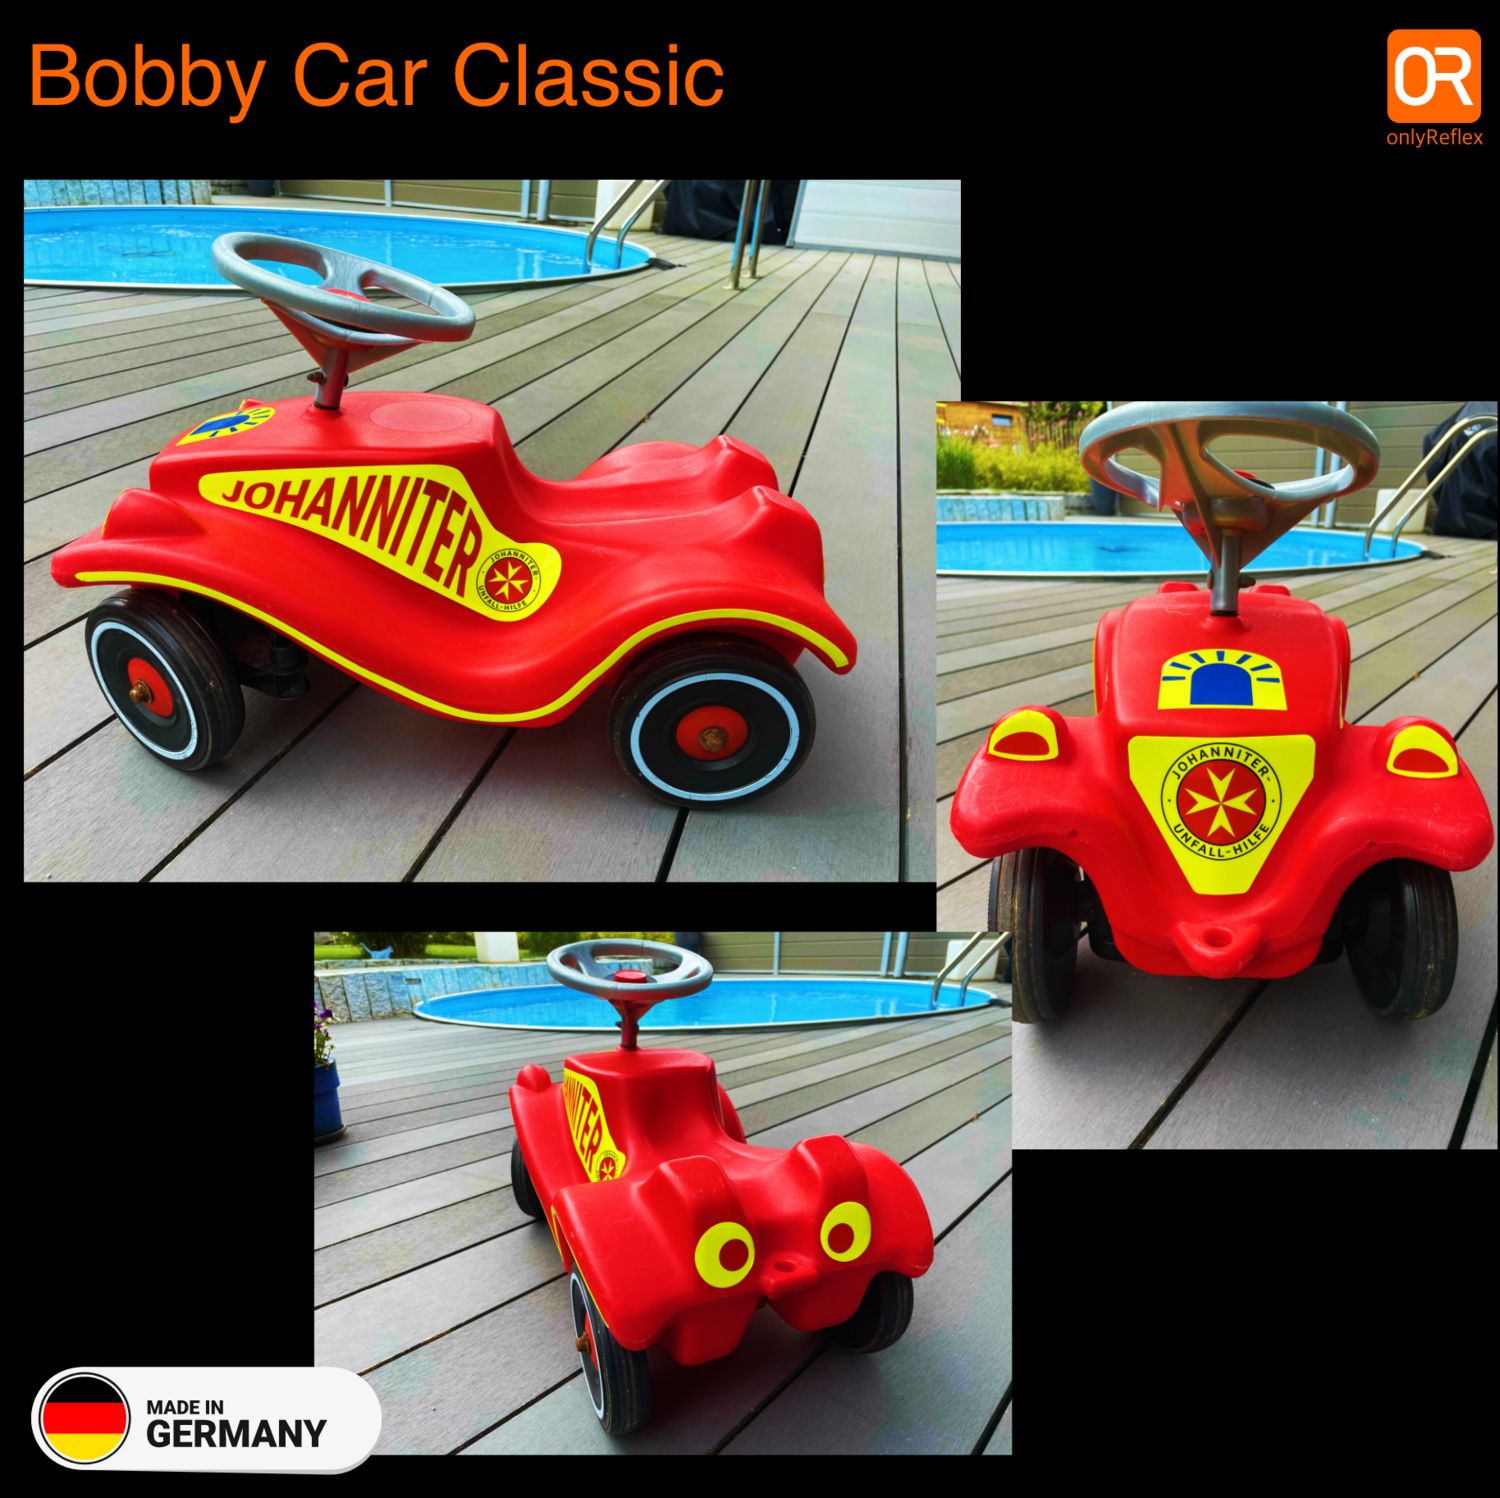 Johanniter Bobby Car Classic, Aufkleber